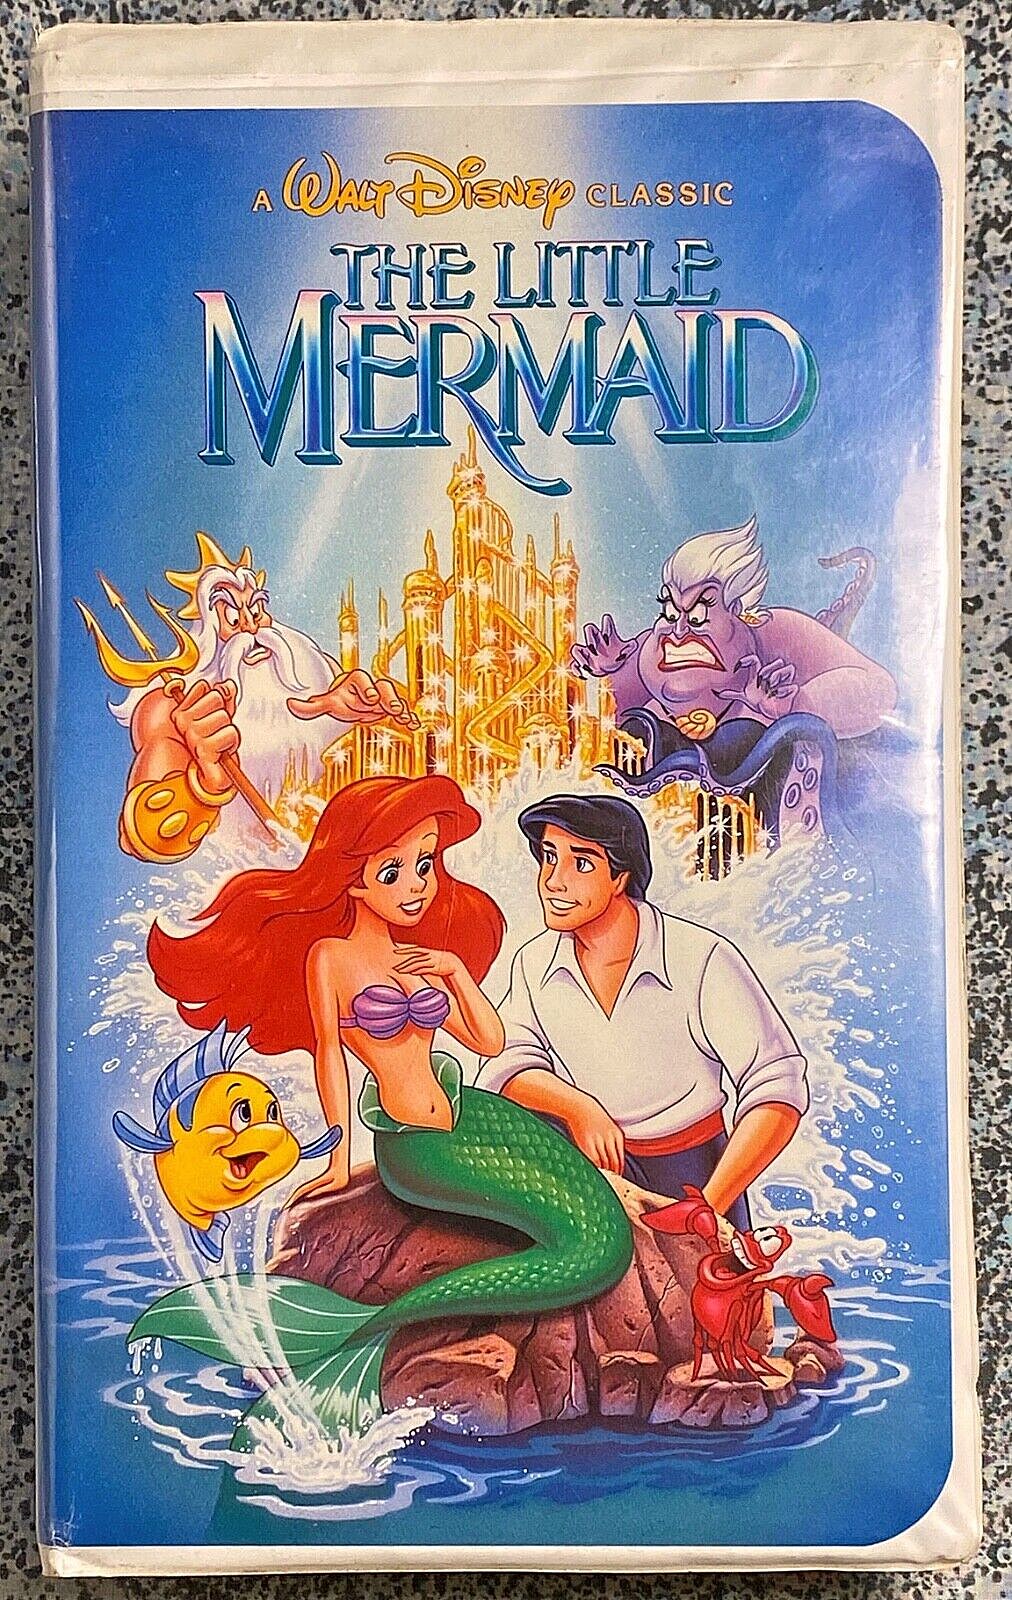 The Little Mermaid VHS hcstore.org